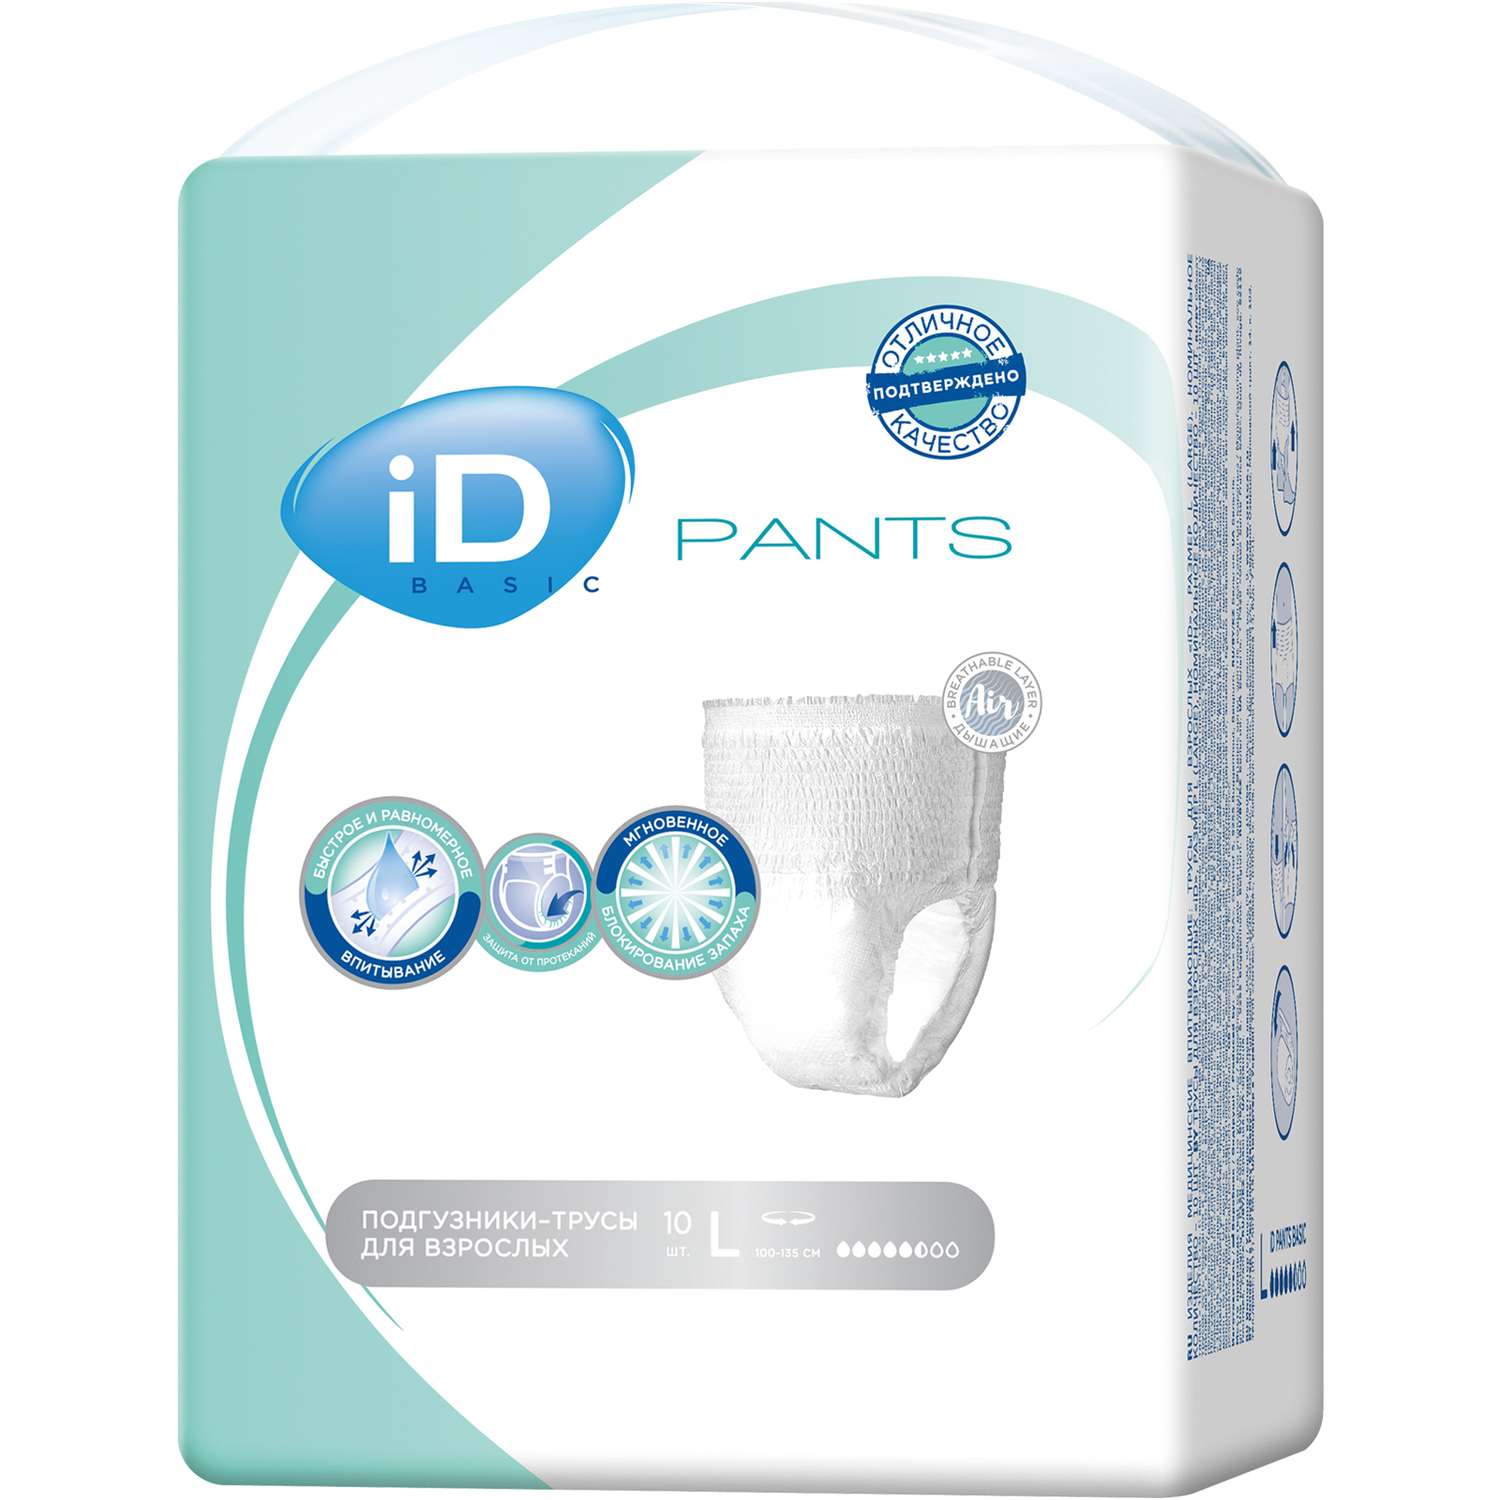 Трусы для взрослых iD Pants basic L 10 шт - фото 2